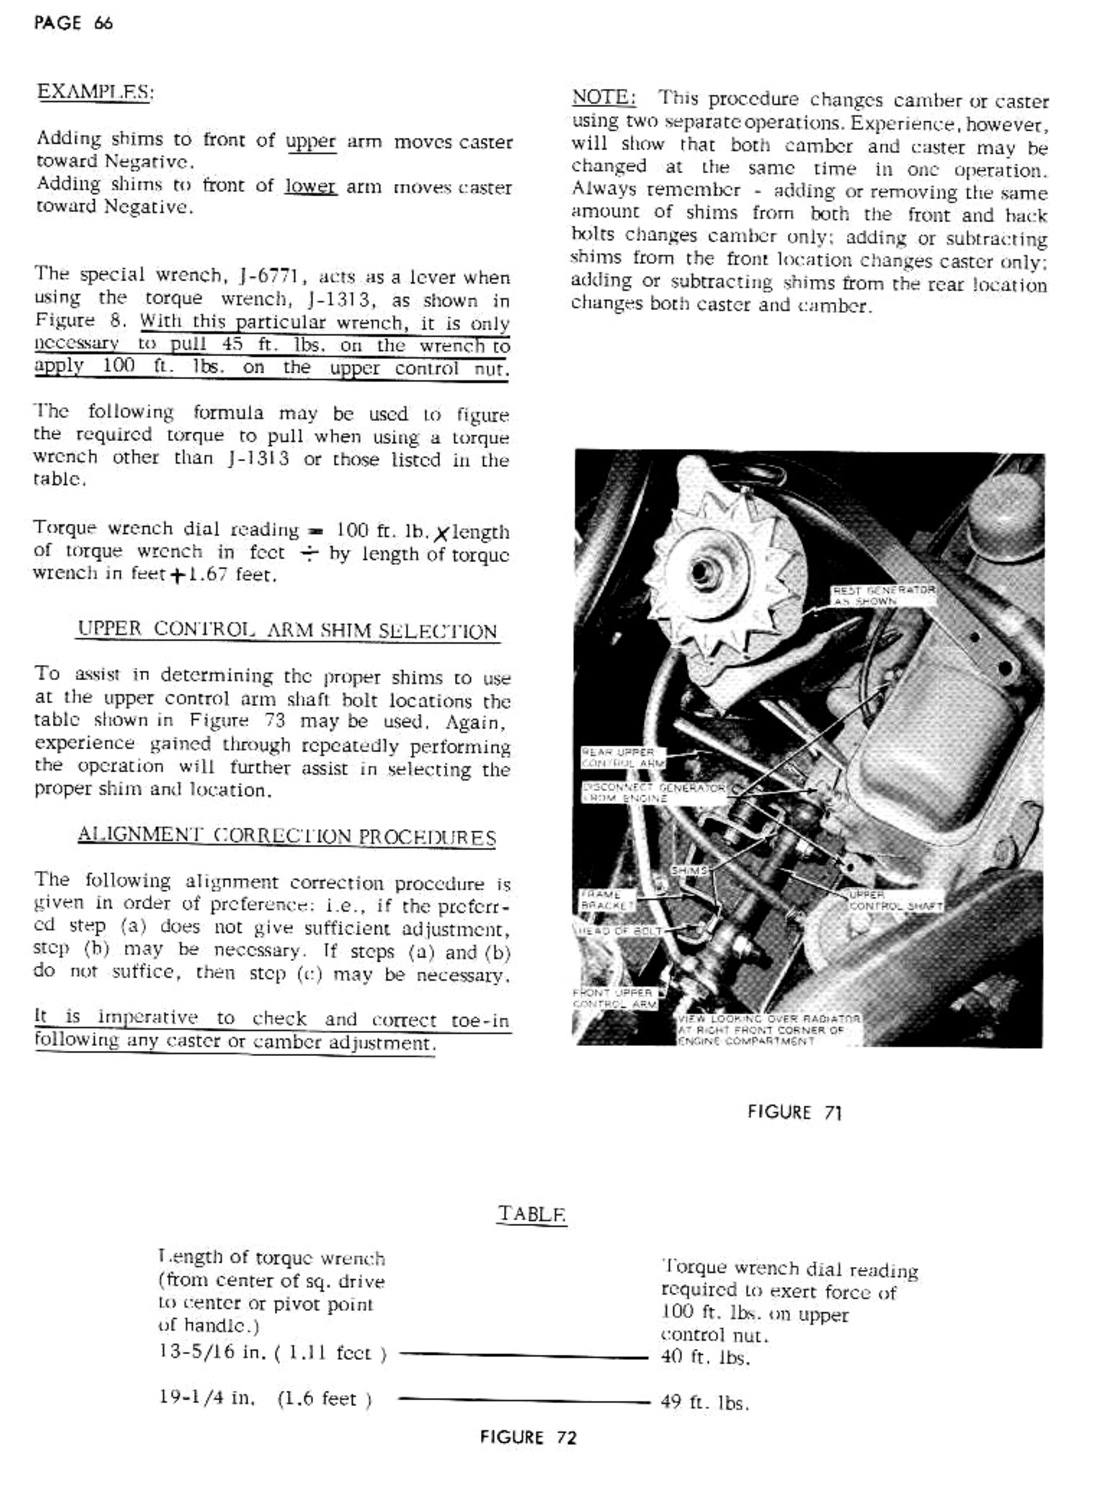 n_1957 Buick Product Service  Bulletins-071-071.jpg